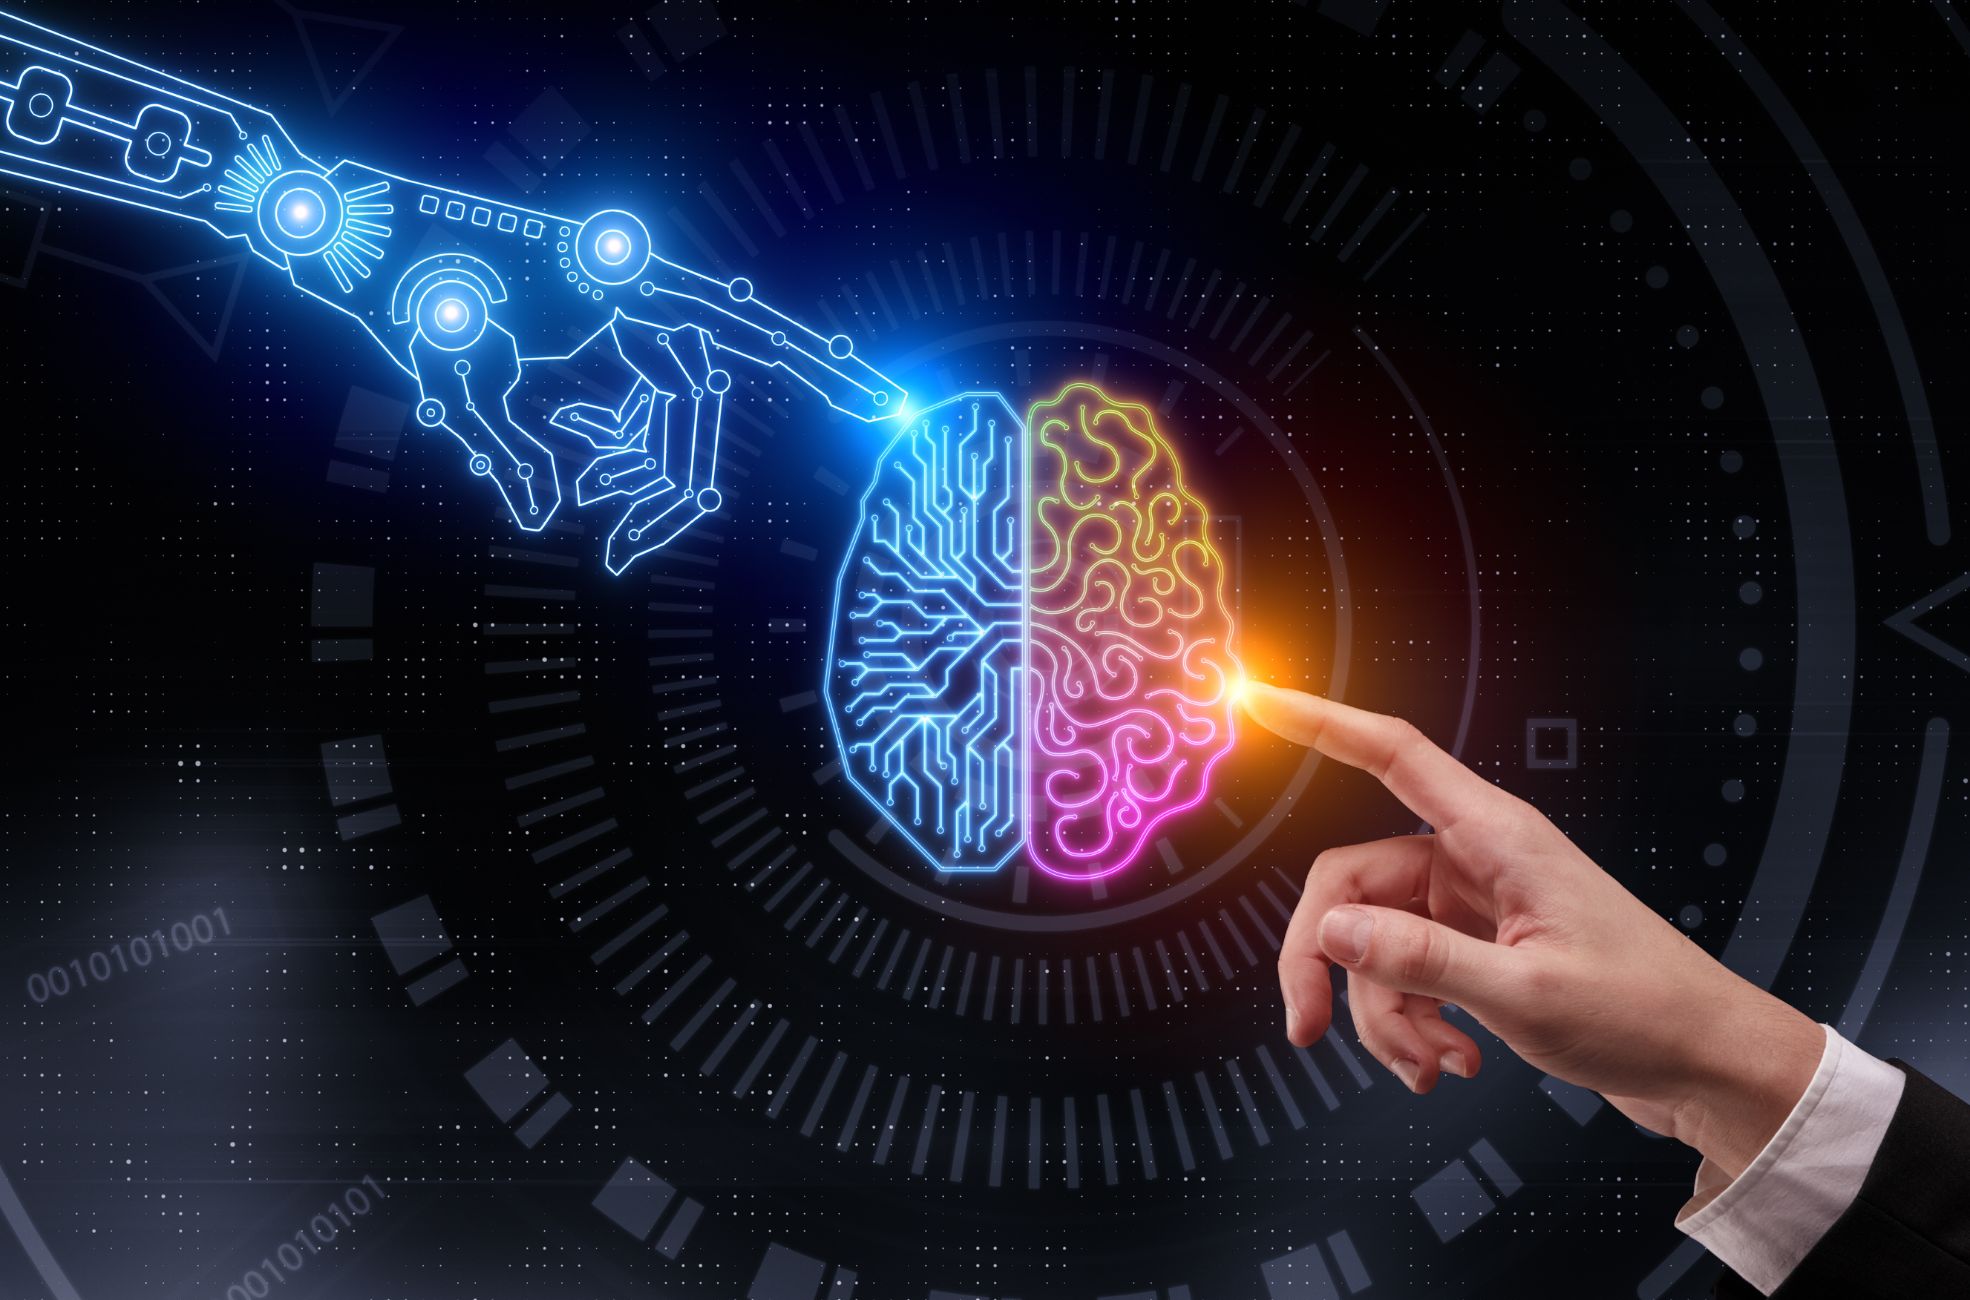 AI Technologies Brain With AI Hand And Human Hand